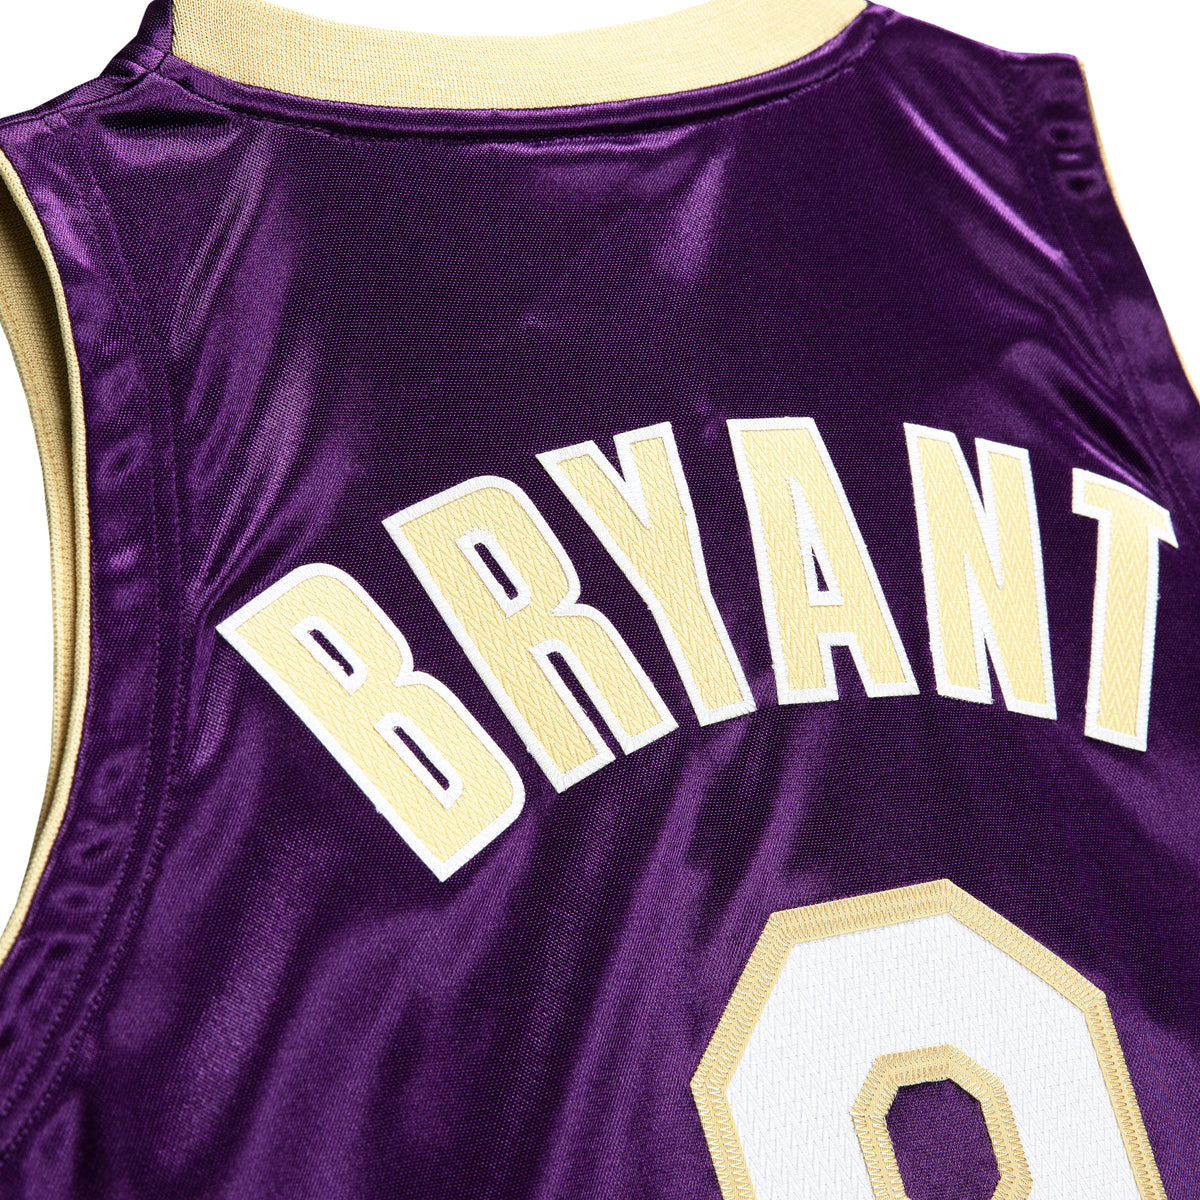 Kobe Bryant #8 Los Angeles Lakers Nike Black '57 Jersey Youth LARGE